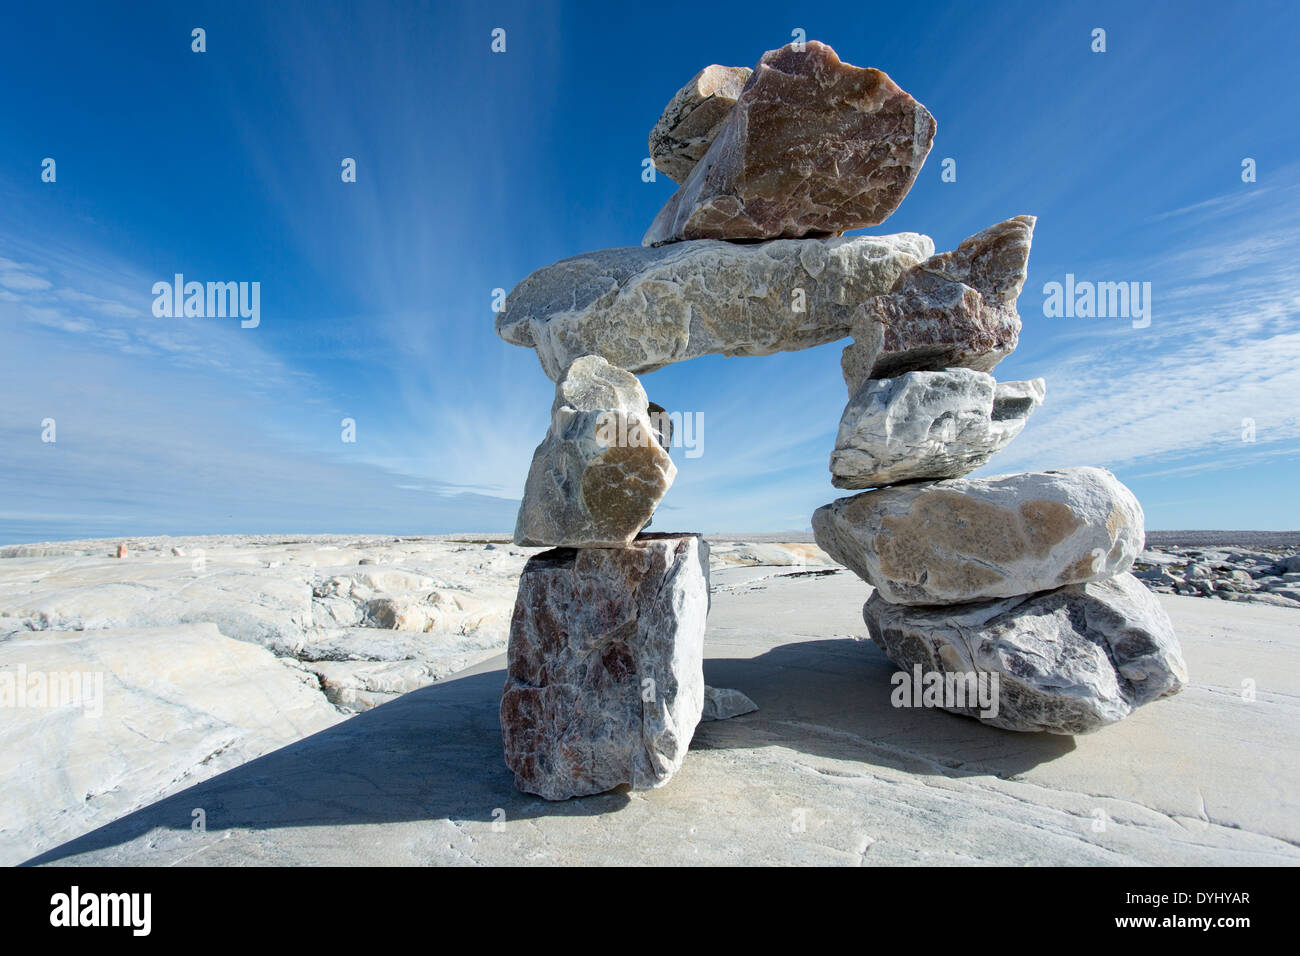 Territorium Nunavut, Kanada Inukshuk Stein Skulptur auf Marmor-Insel entlang der Hudson Bay Stockfoto